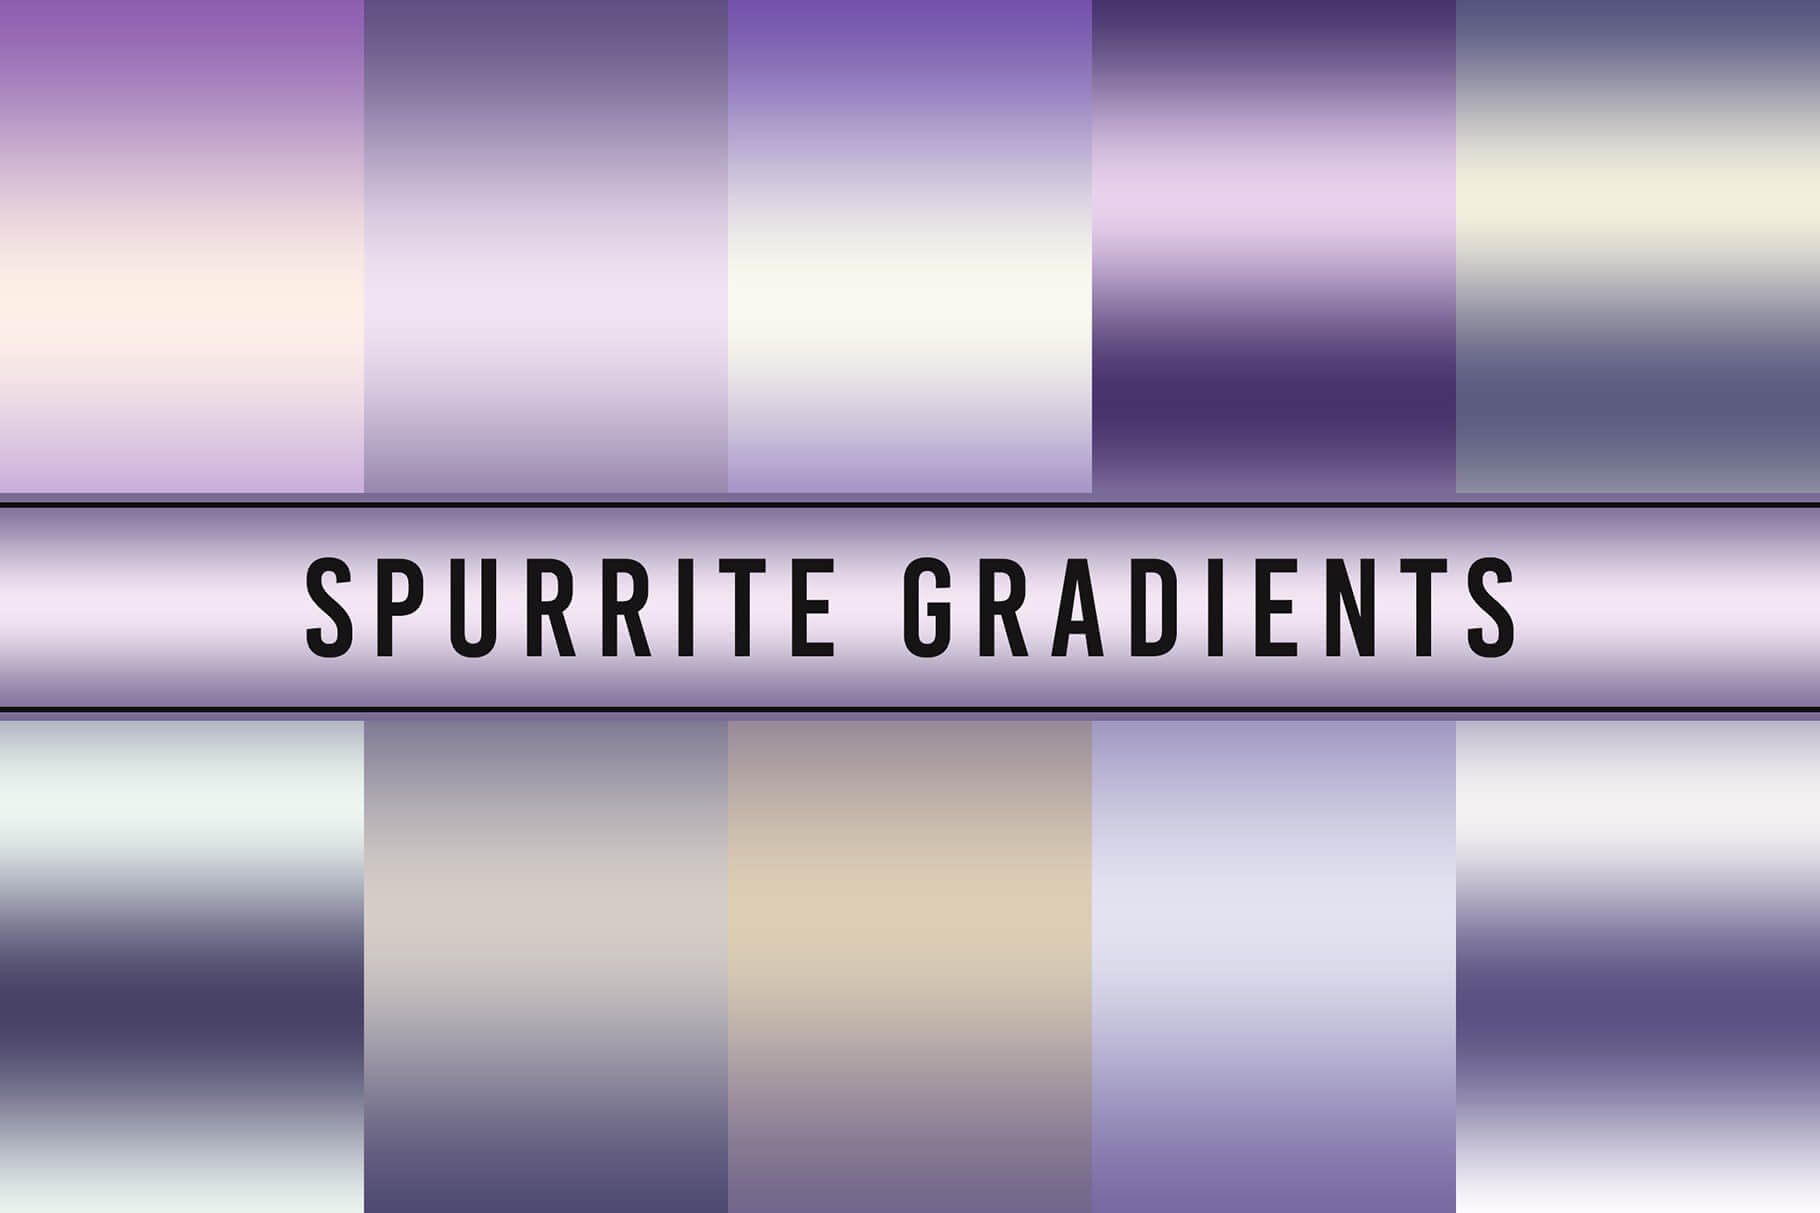 Spurrite Gradients cover image.